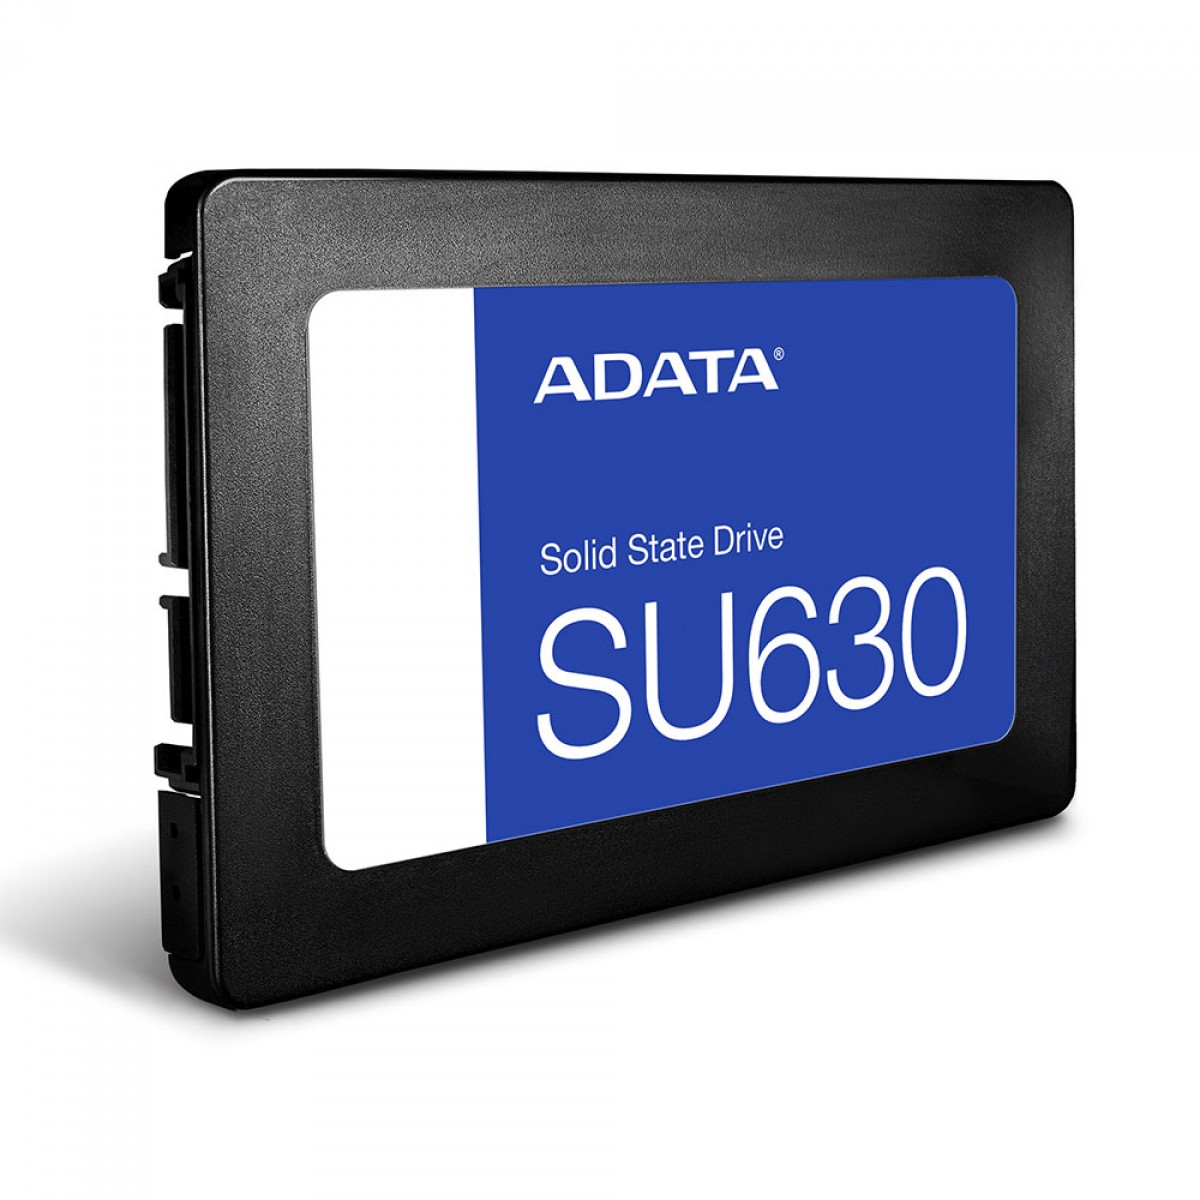 SSD Adata SU630, 480GB, Sata III, Leitura 520MBs e Gravação 450MBs, ASU630SS-480GQ-R